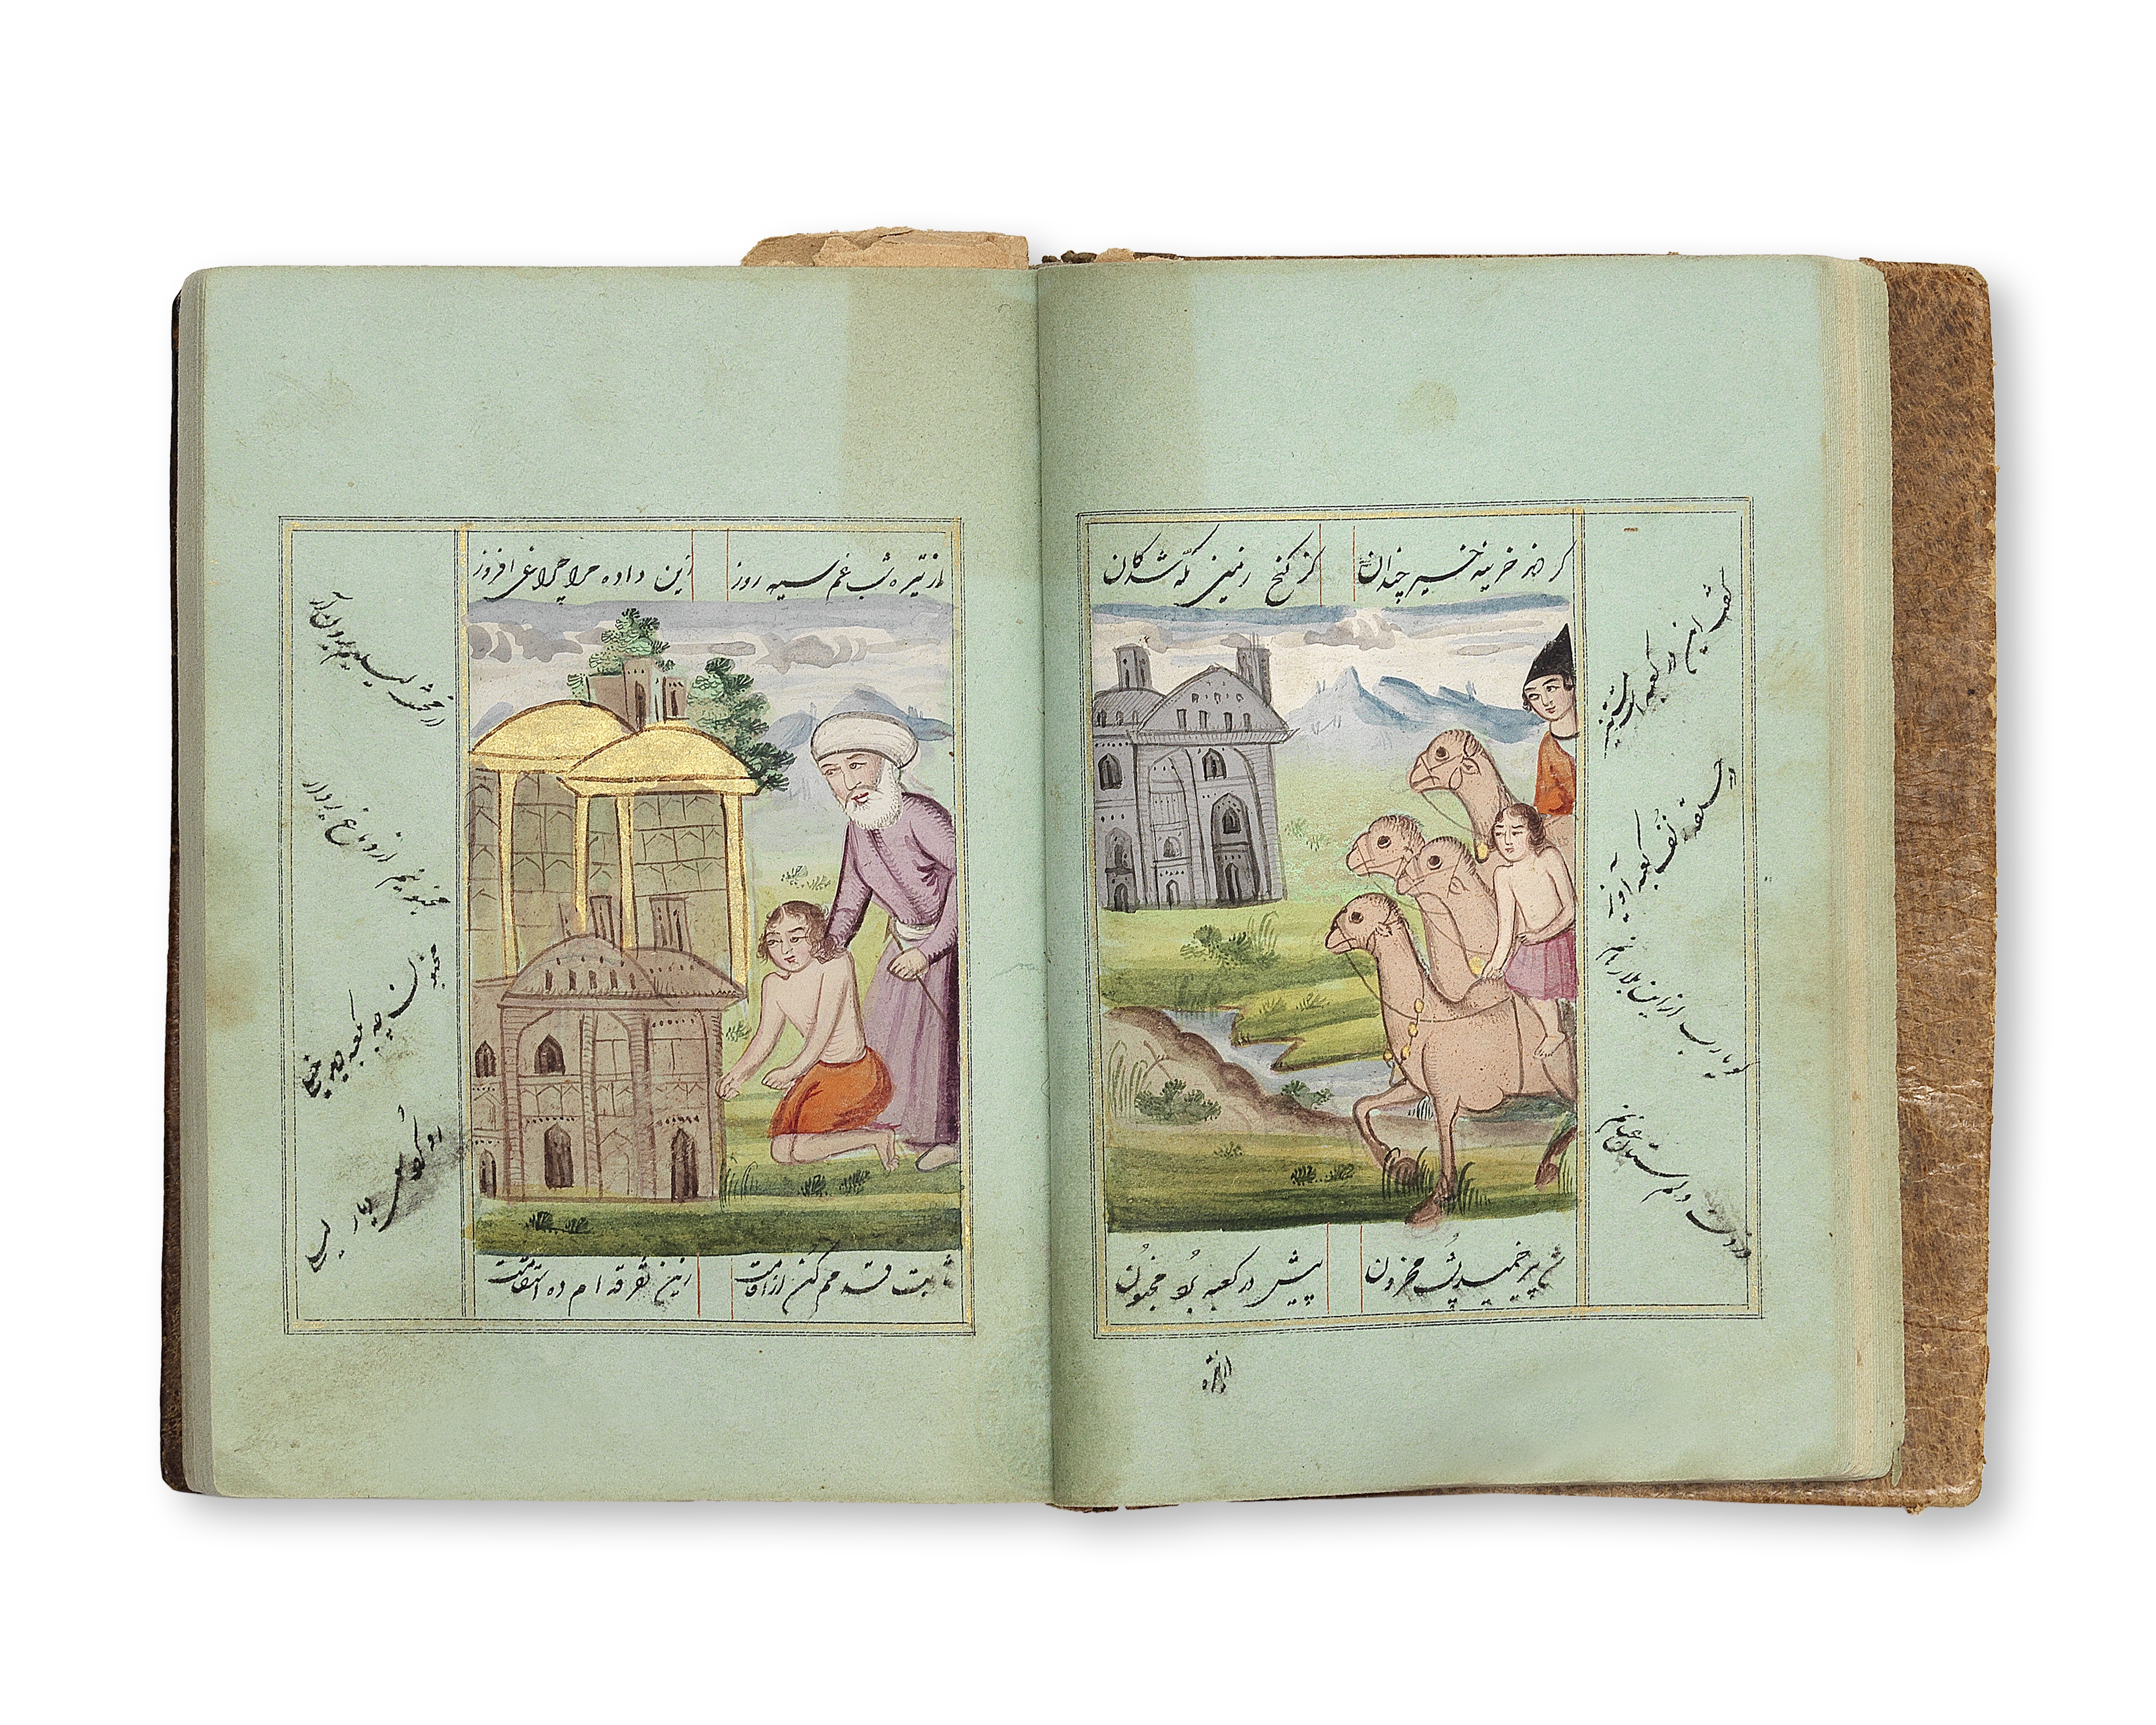 An attractive small manuscript copy of Maktabi Shirazi's Layla va Majnun, with twelve illustratio...